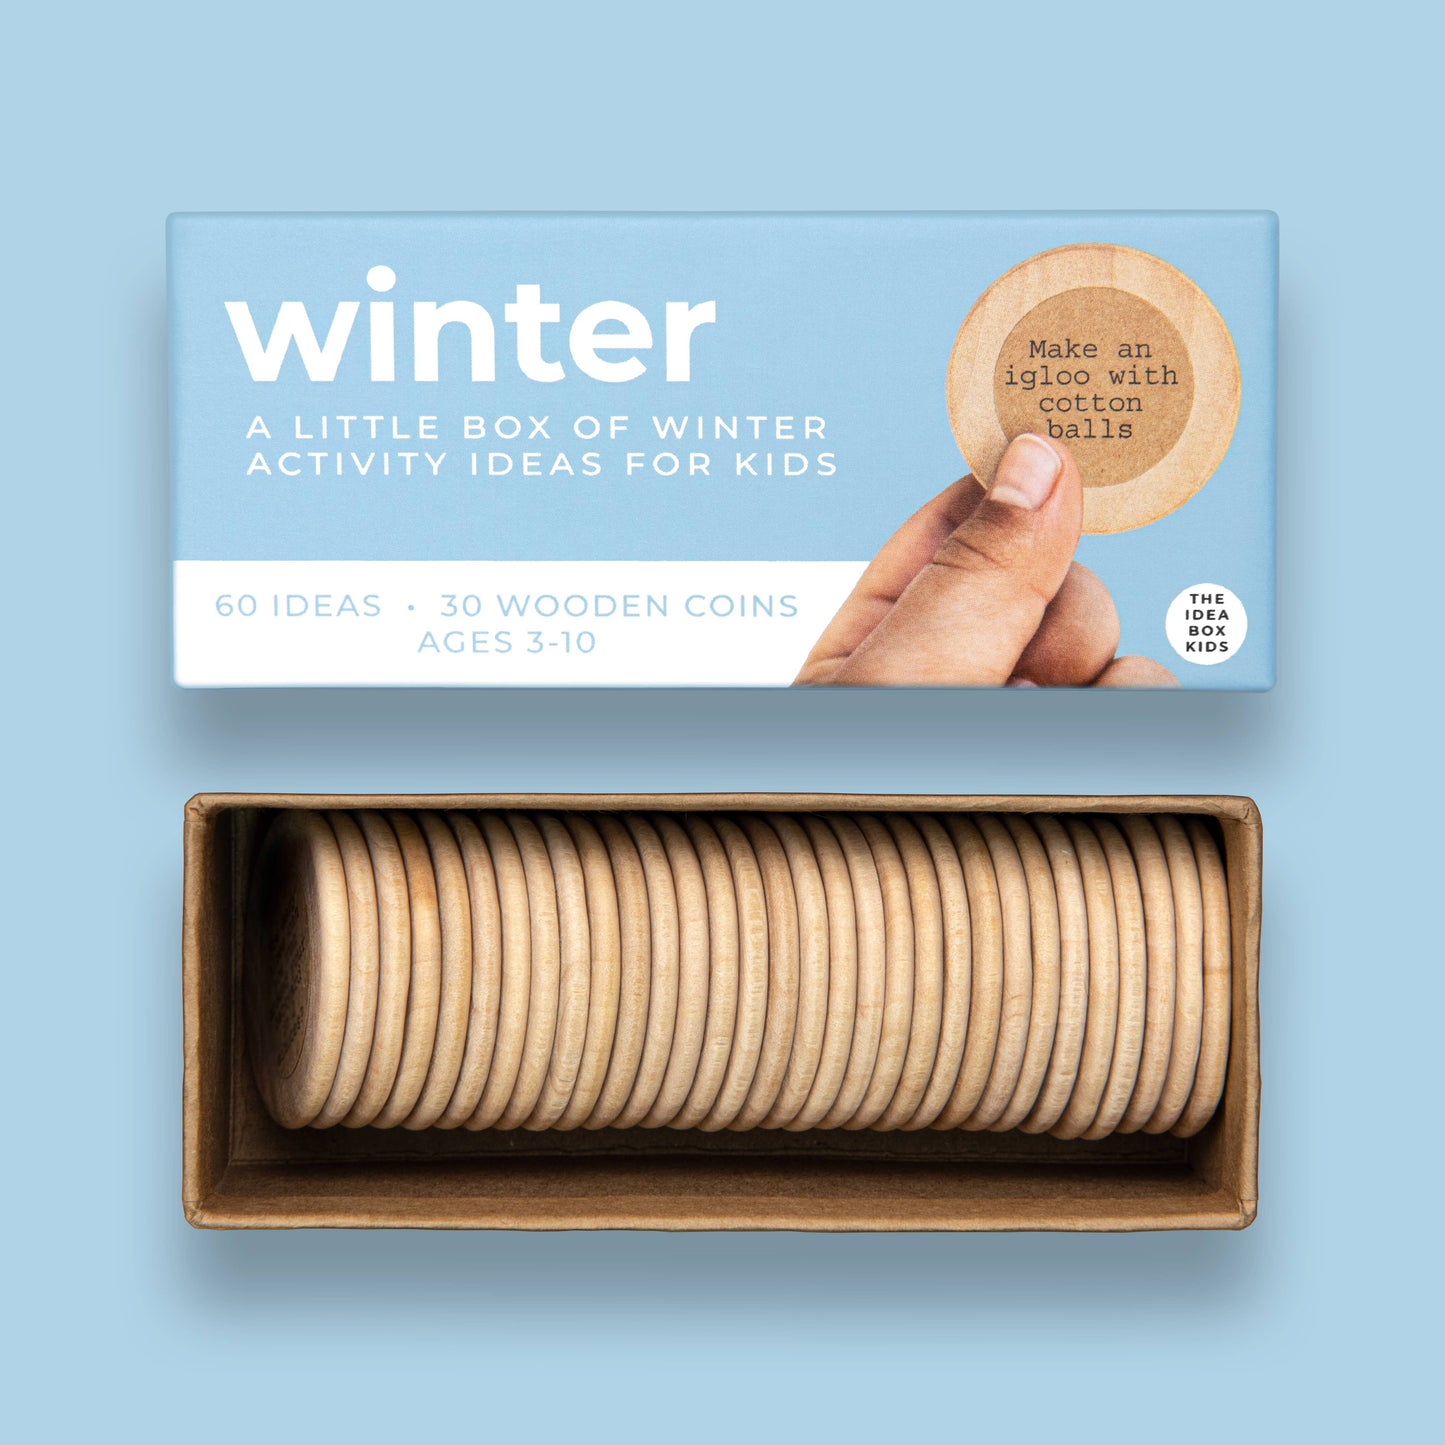 The Idea Box Kids - Winter - Simple Winter Activities for Kids